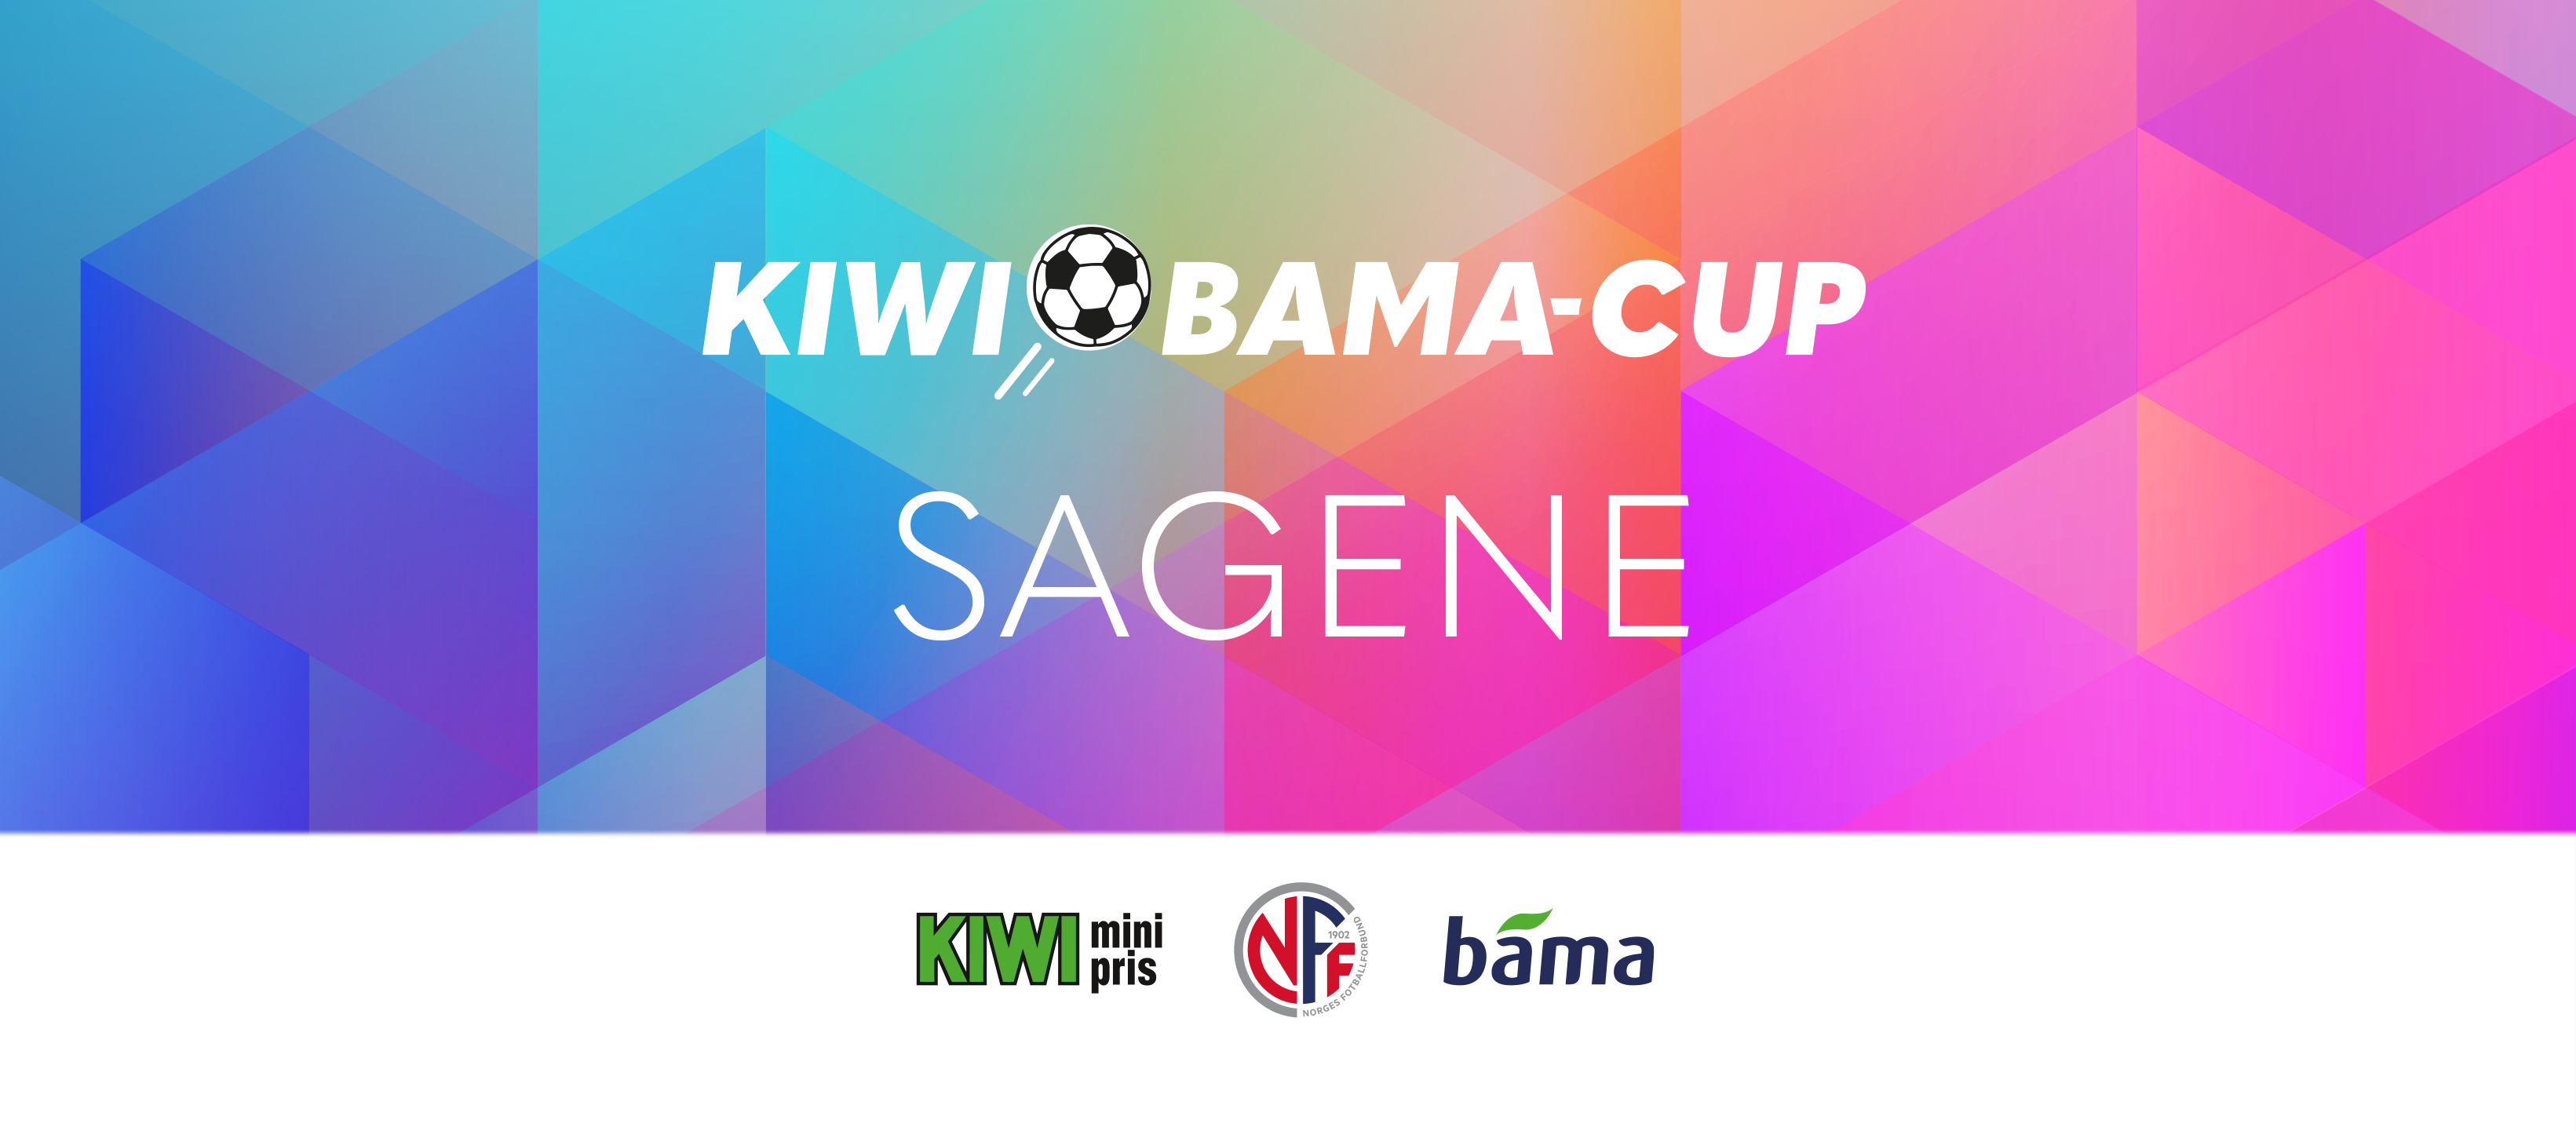 FB-BANNER KIWI-BAMA-Cup - Sagene.png